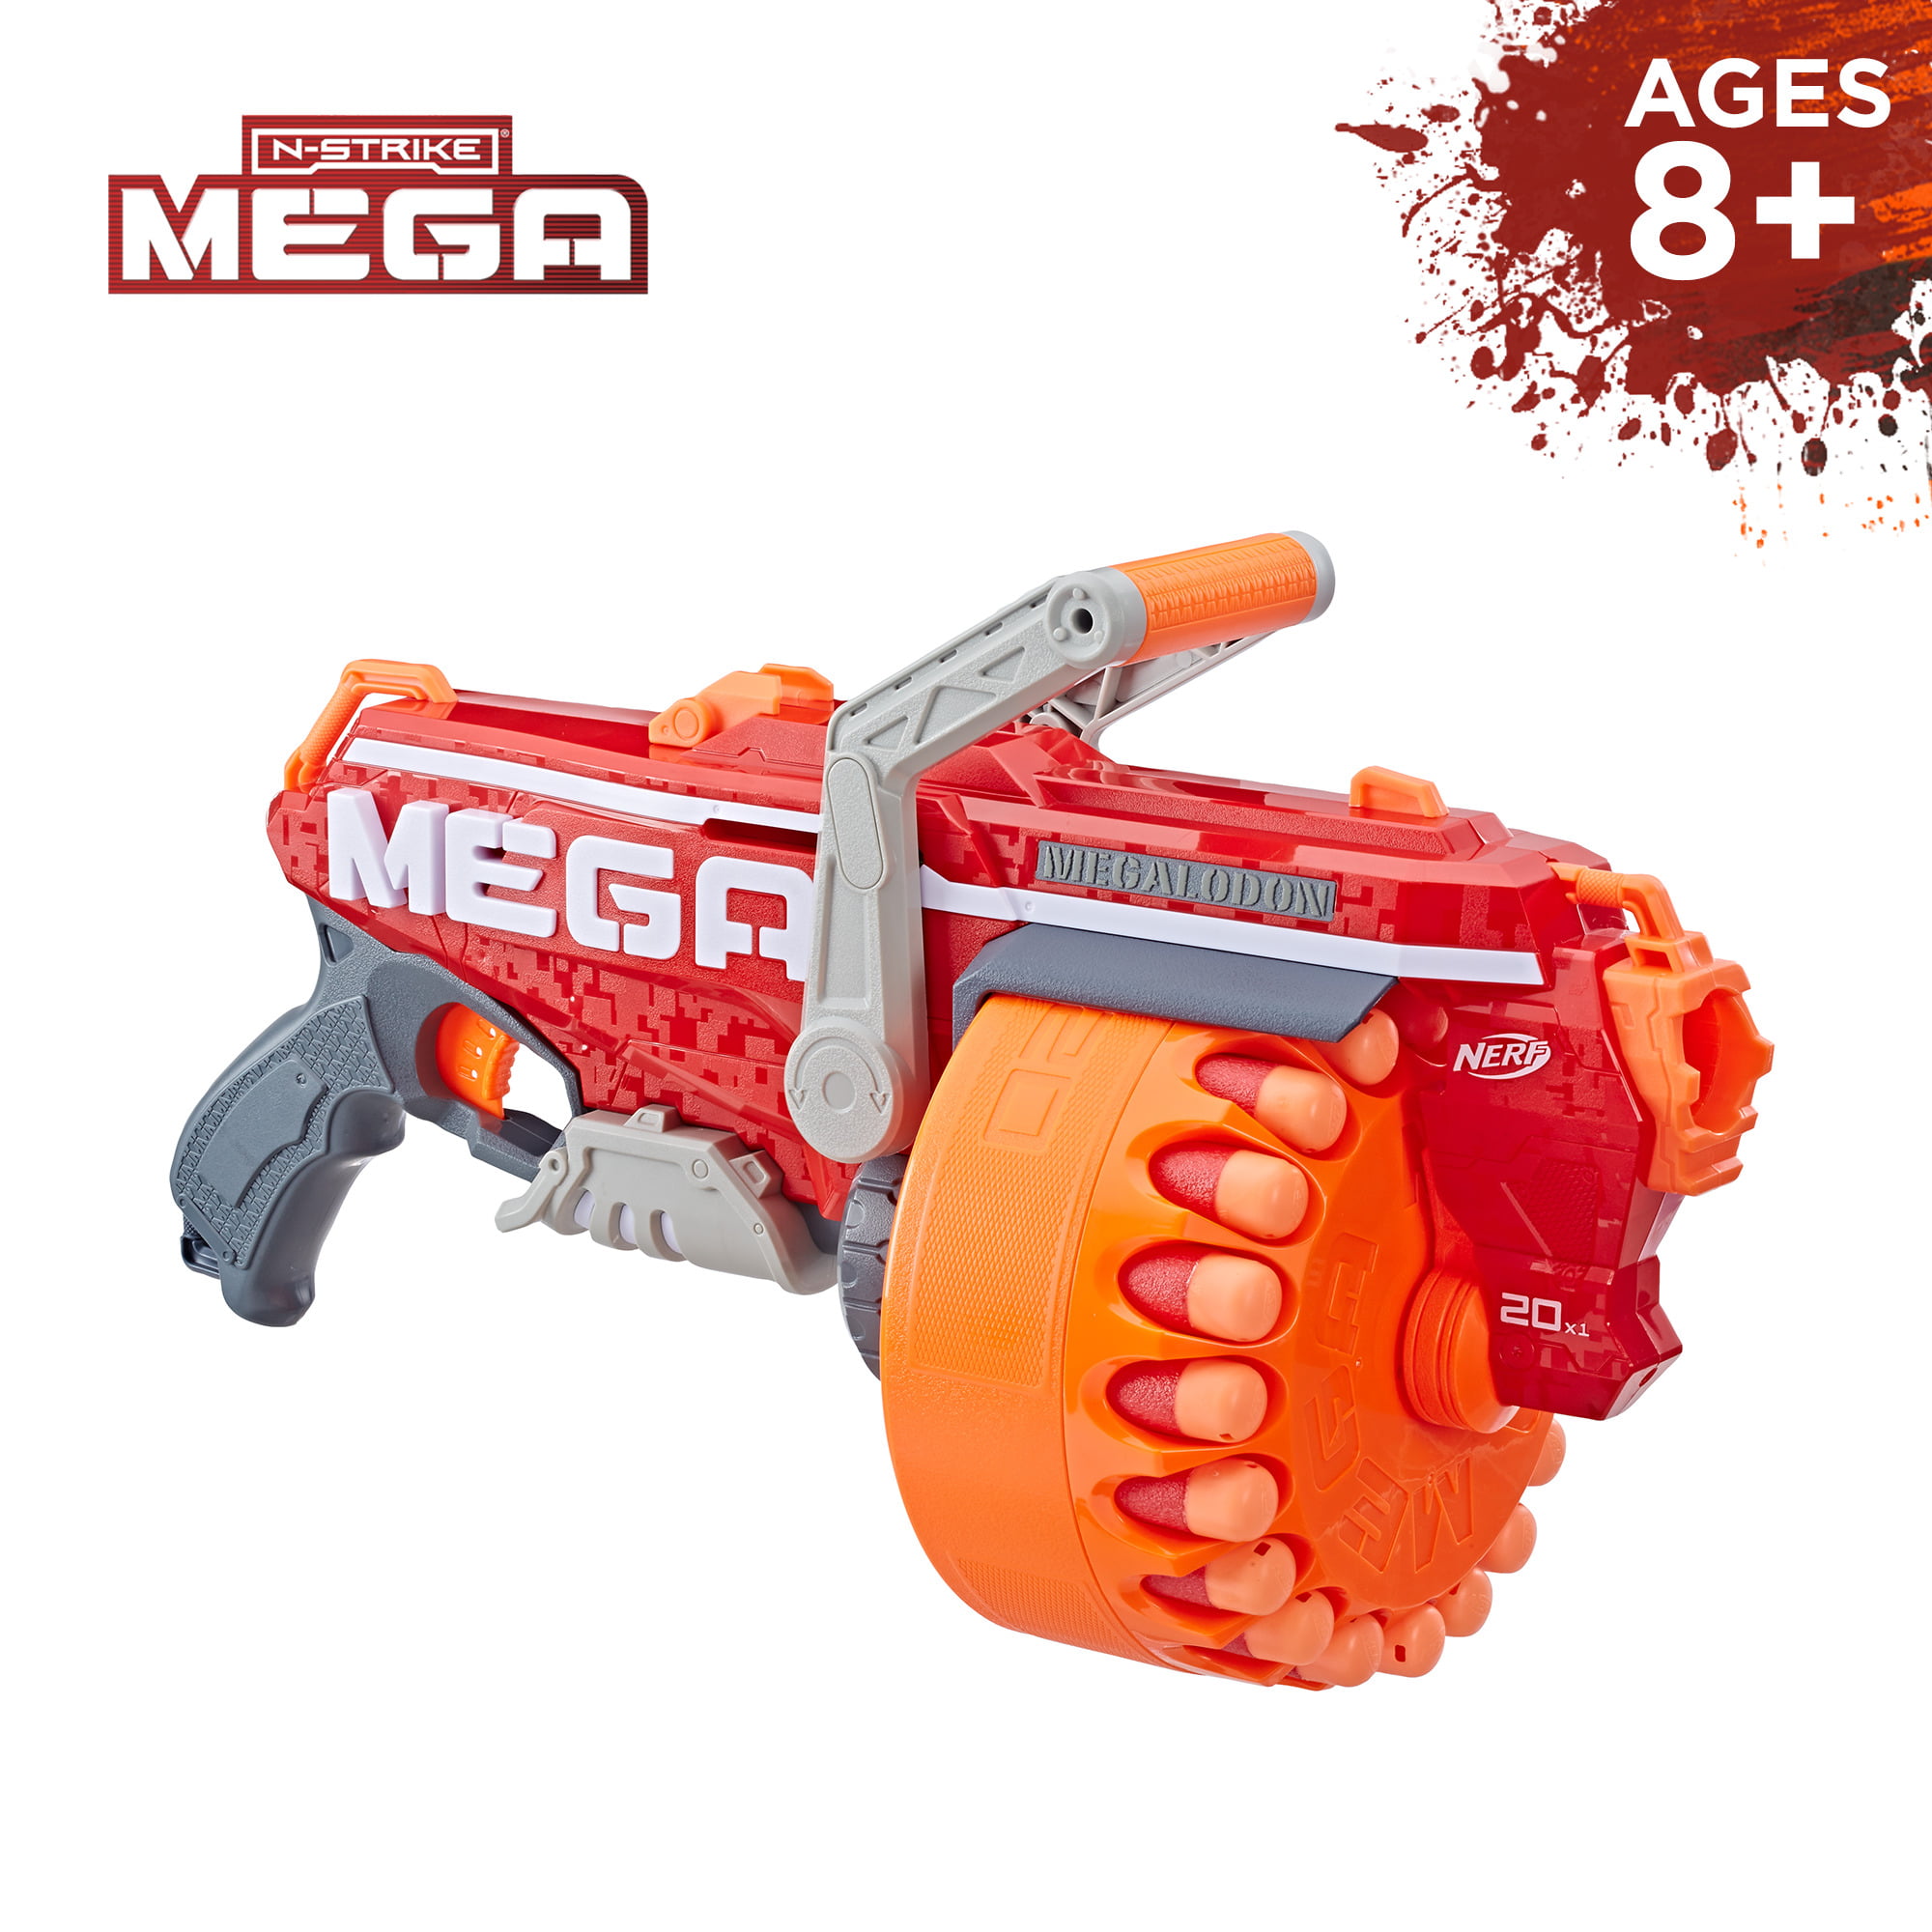 Megalodon N-Strike Mega Toy Blaster Slam-fire Action 20 Darts